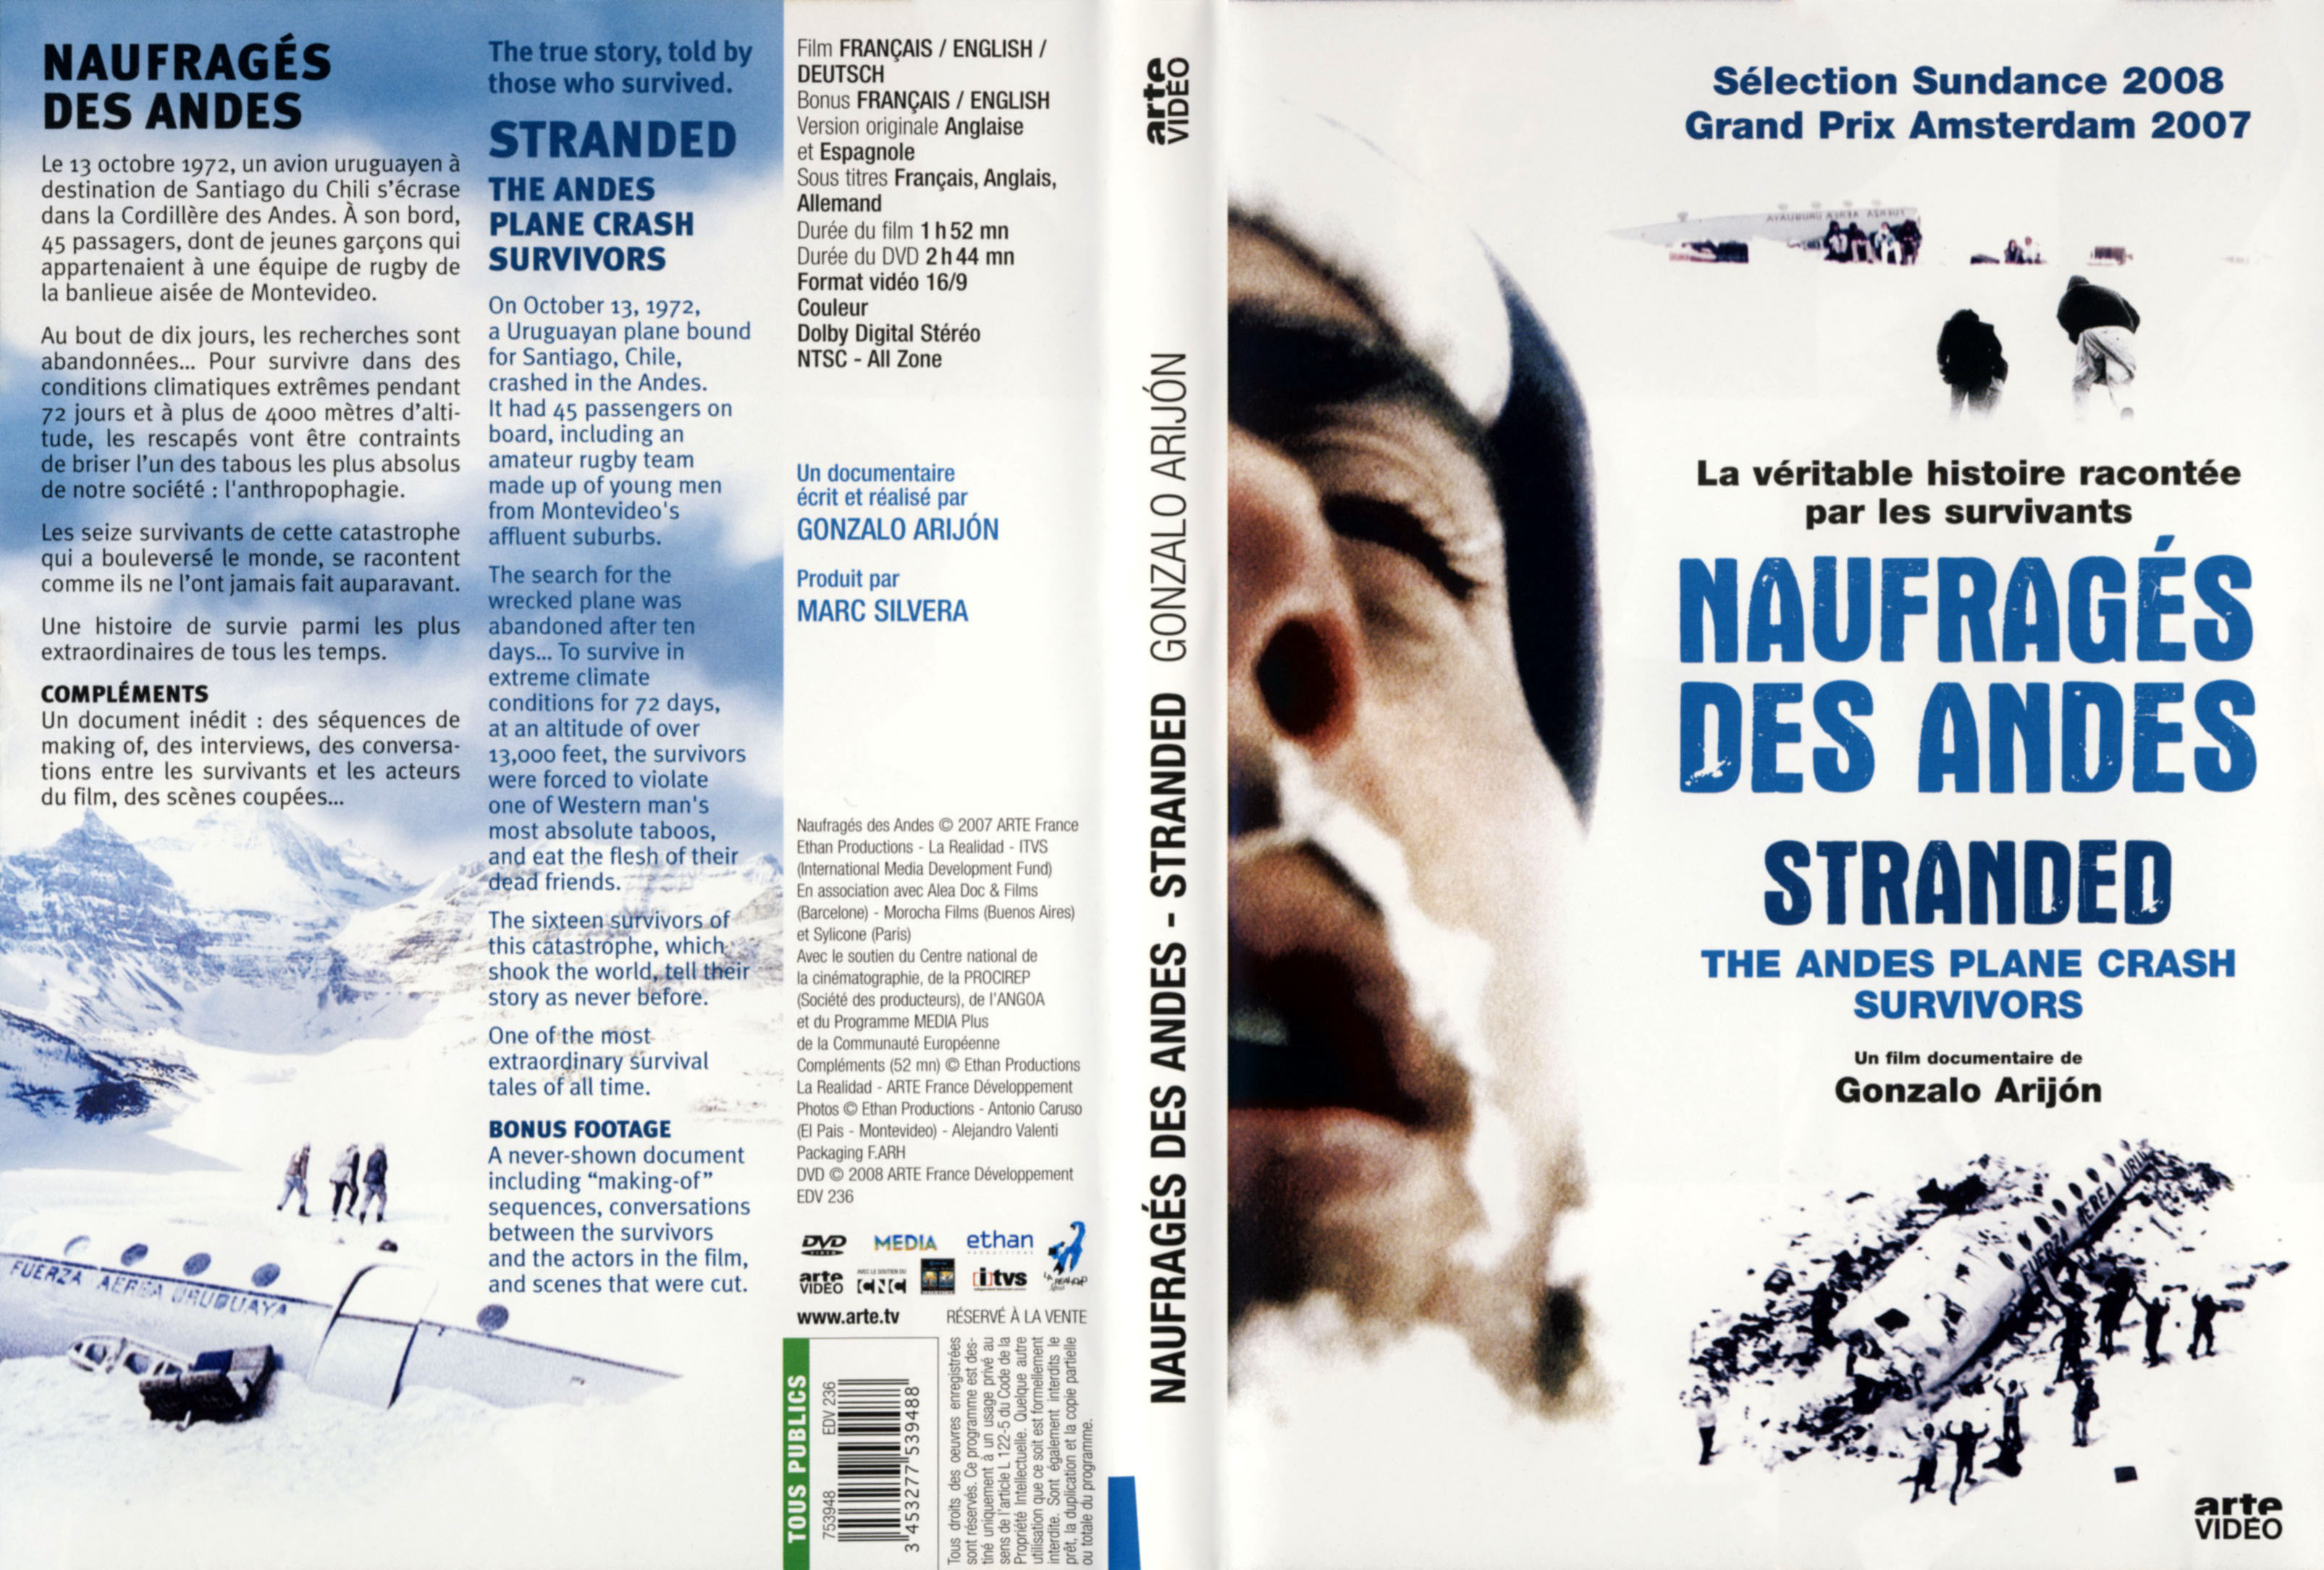 Jaquette DVD Naufrags des andes